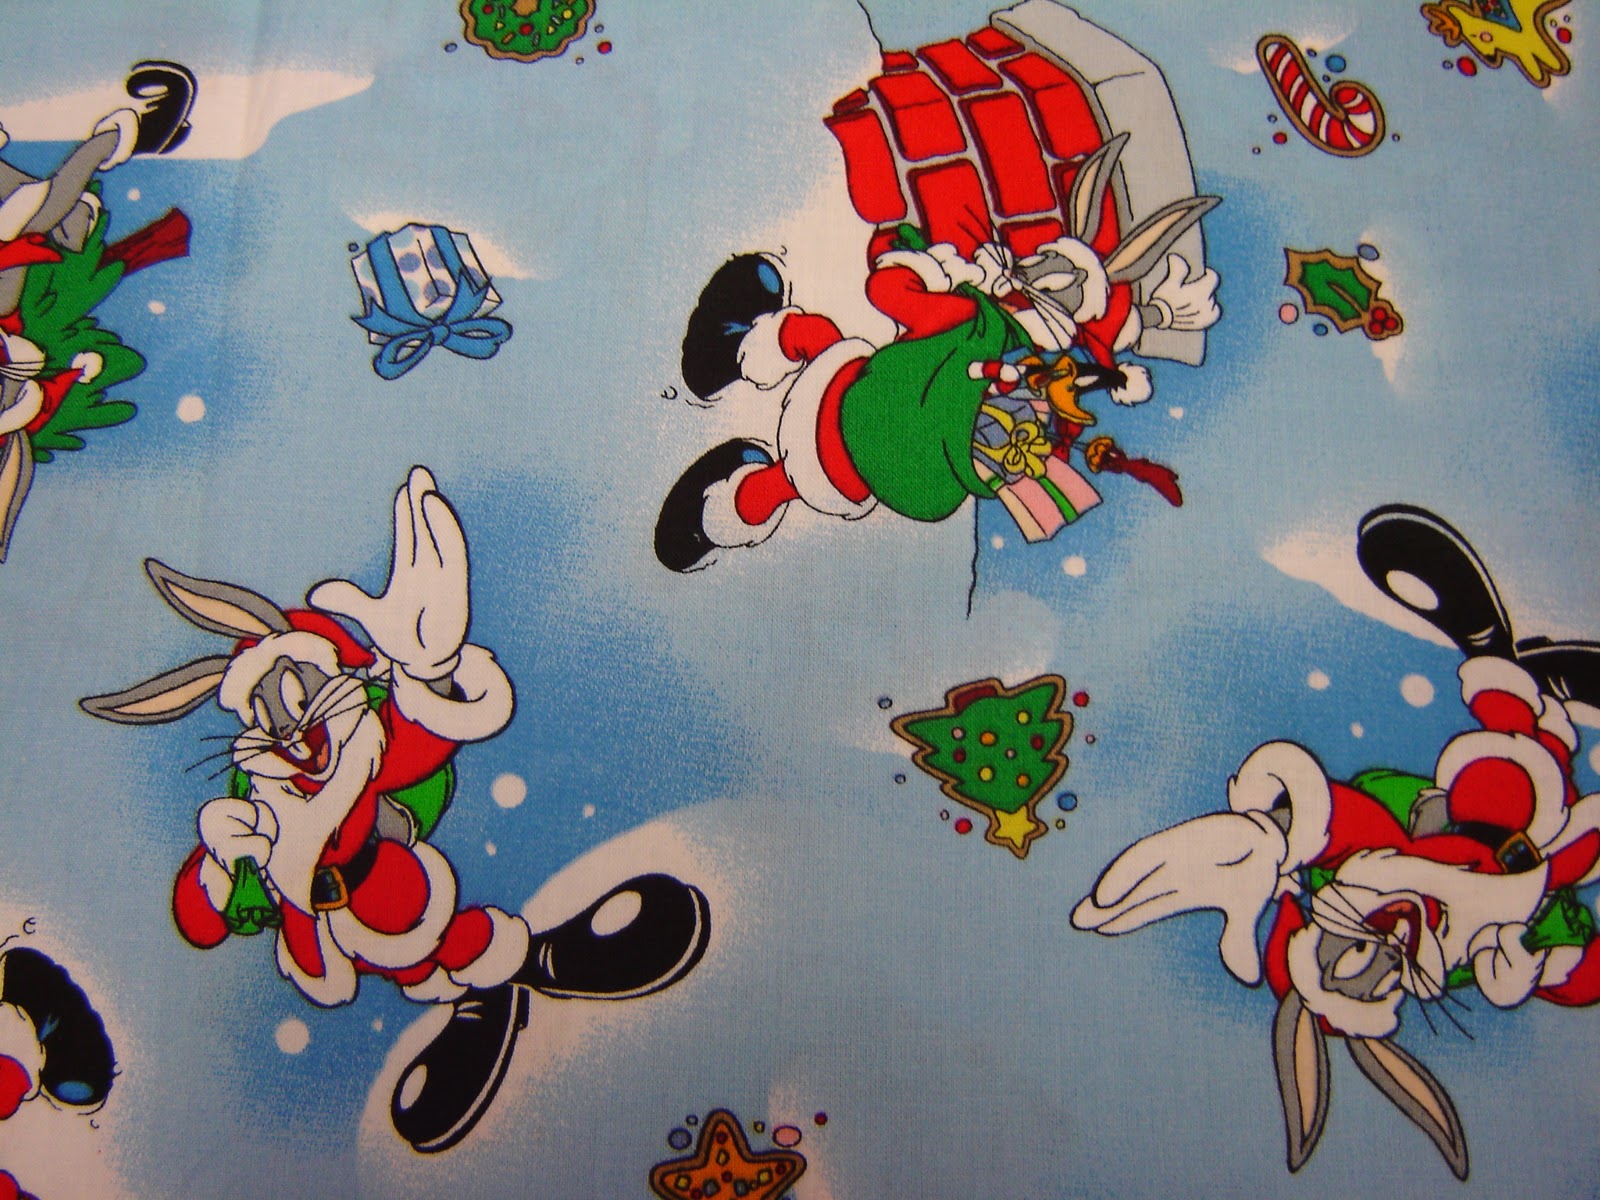 looney tunes christmas bugs bunny c JPG wallpaper background 1600x1200